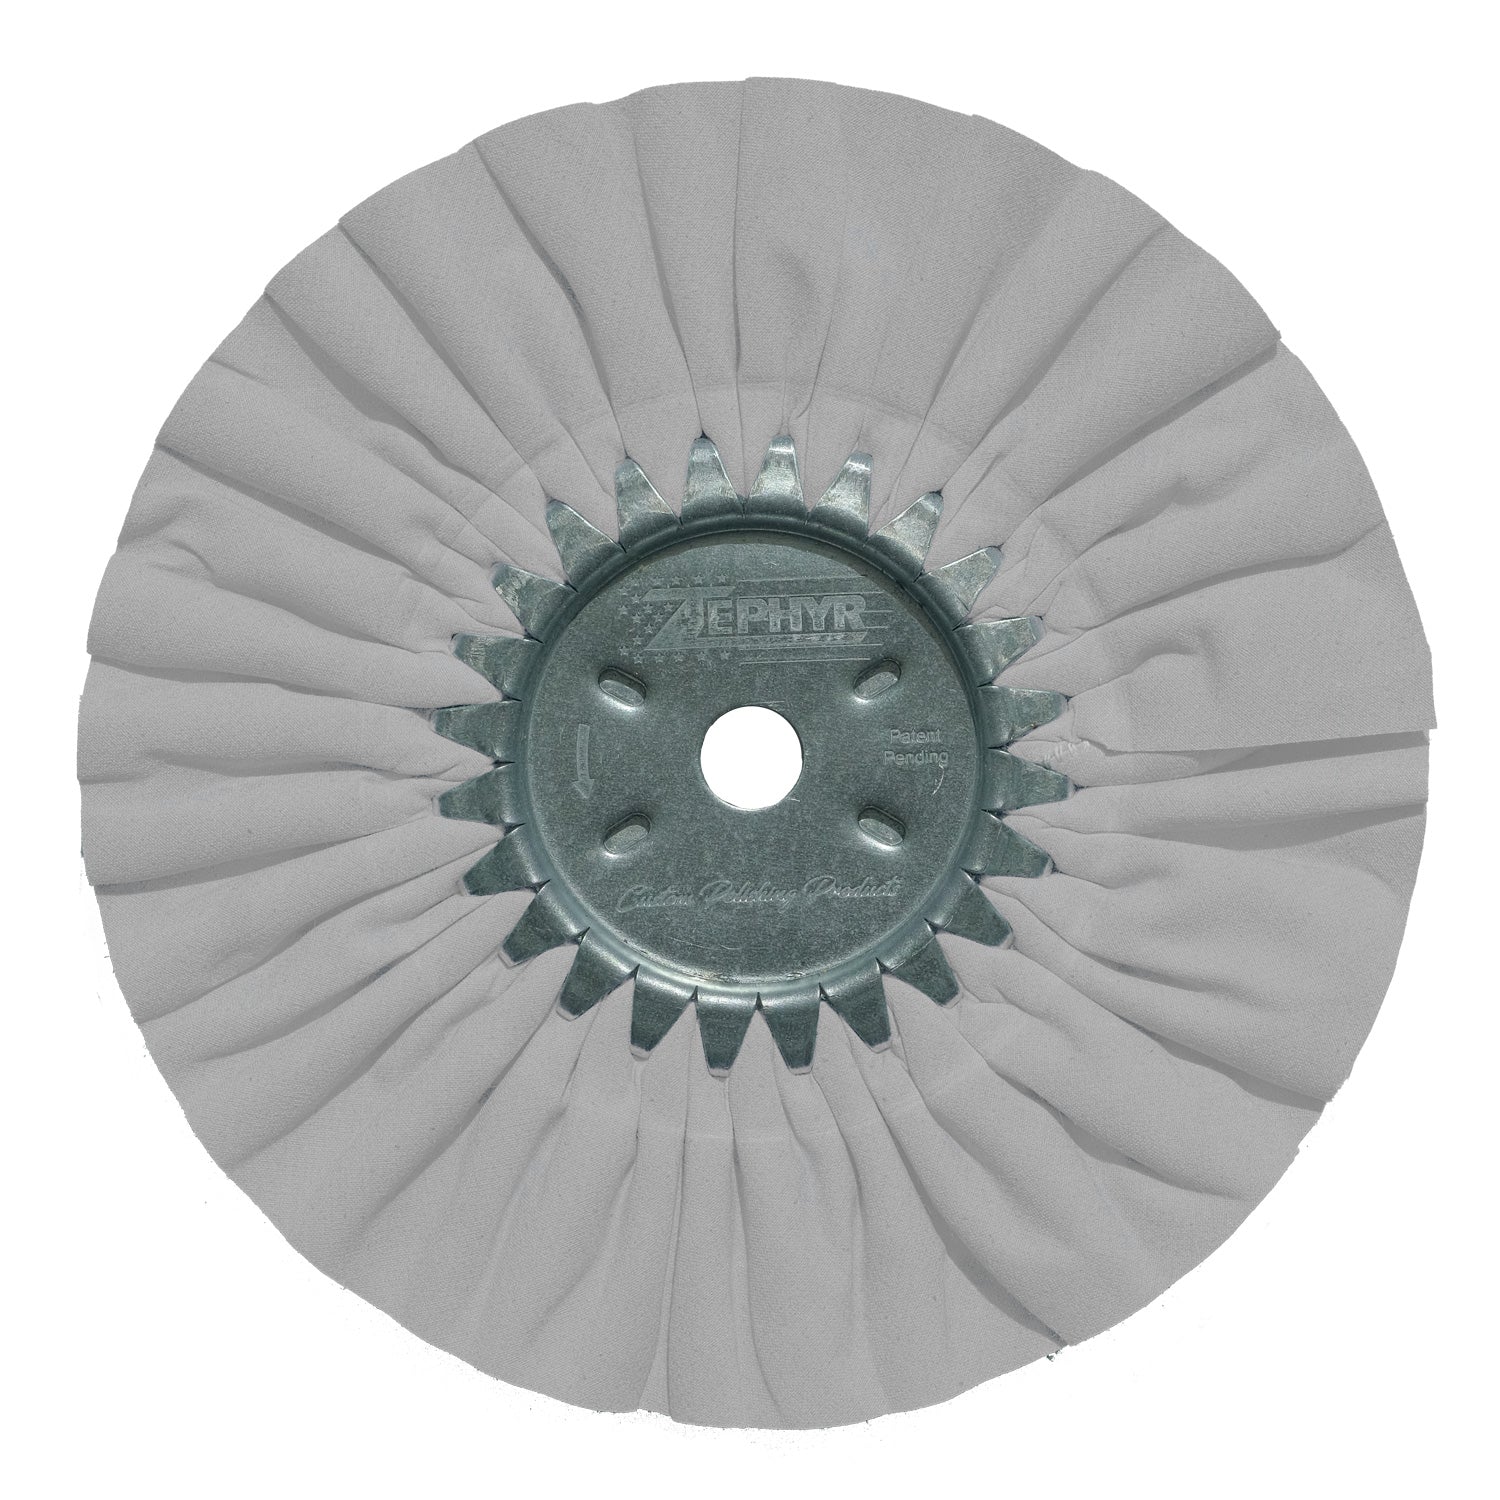 Zephyr Aww 58-8 HF Airway 8 Mill Treat White Buffing Wheel